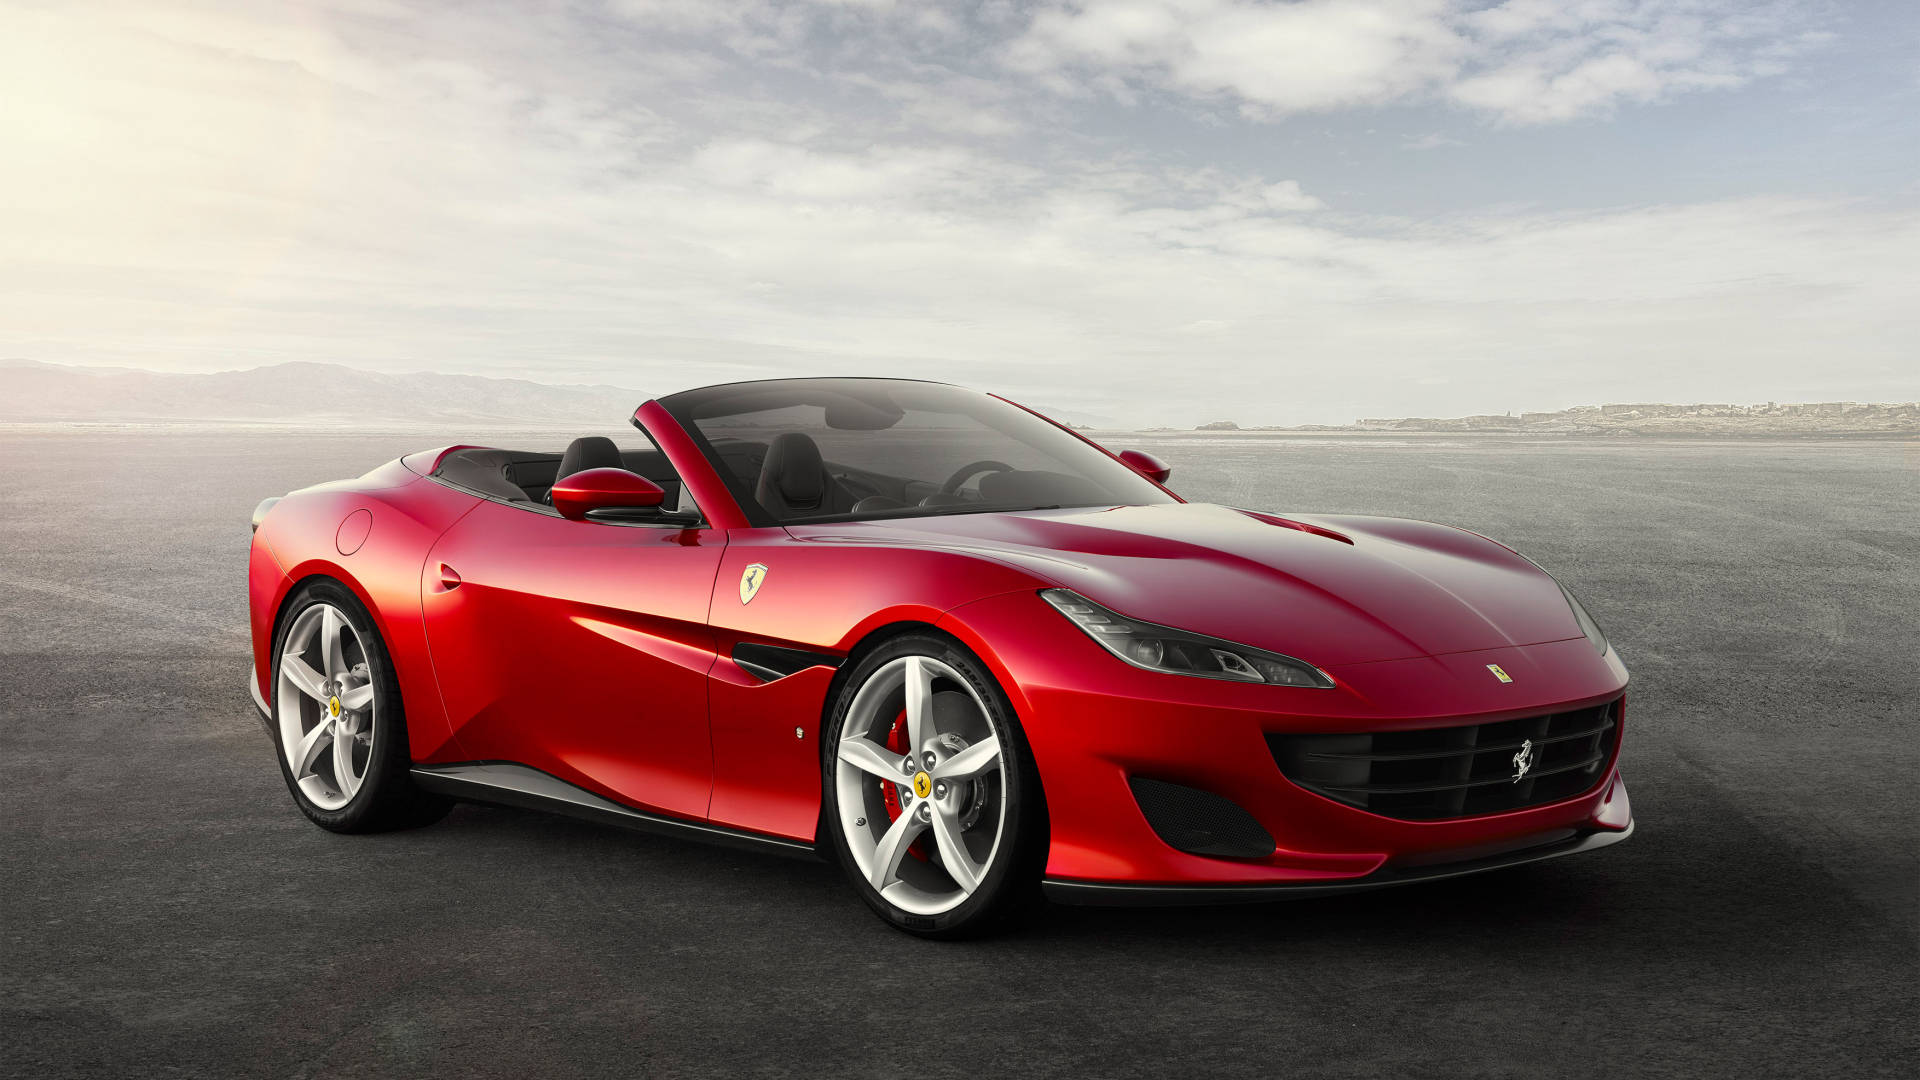 Hyper-speed Driving - Watch the Ferrari take off! Wallpaper